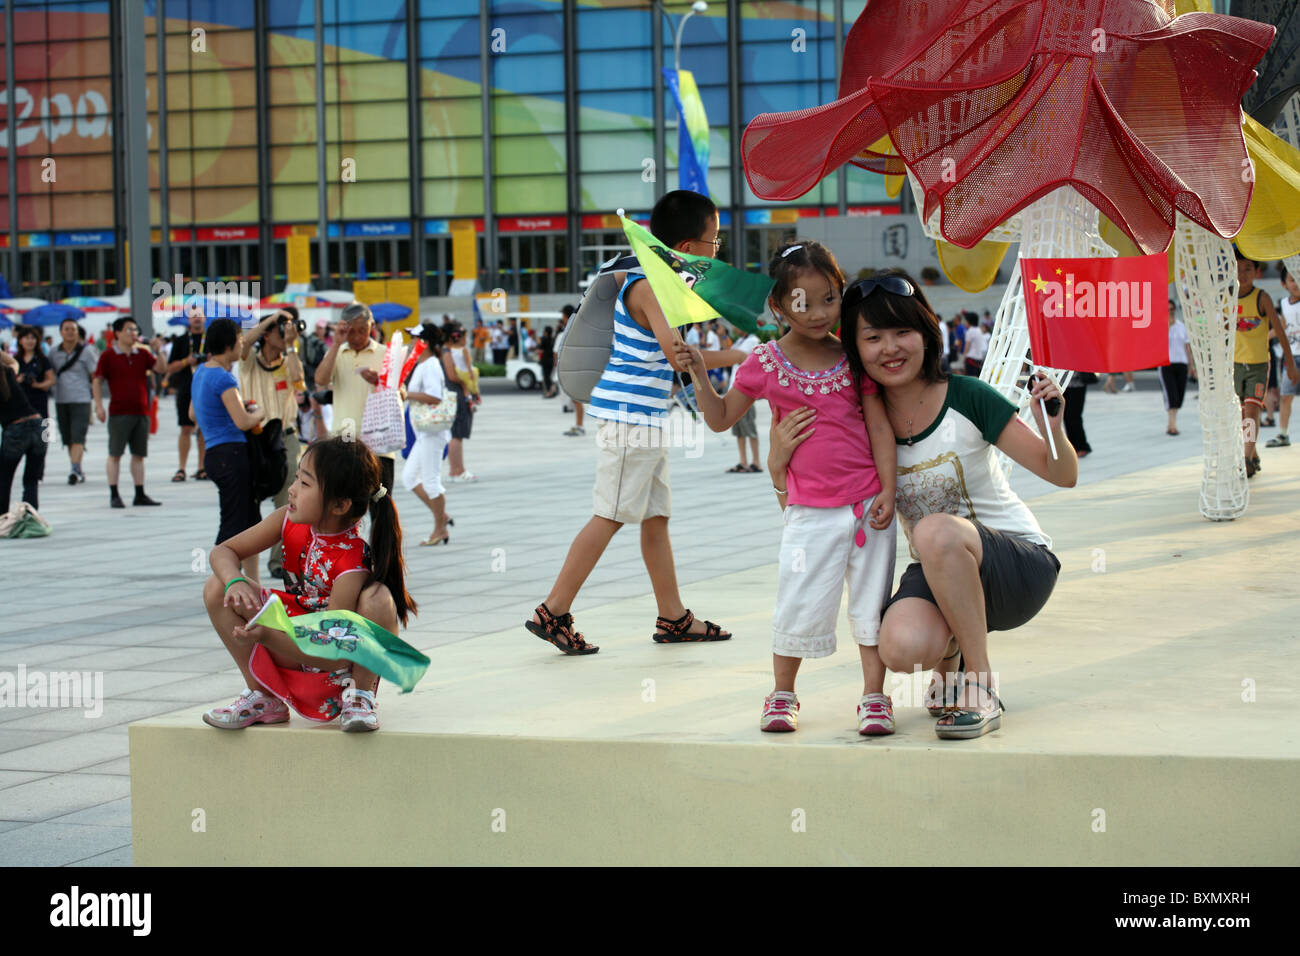 Madre e hija posando para fotografiar dentro del complejo olímpico, Juegos Olímpicos, Pekín, China Foto de stock